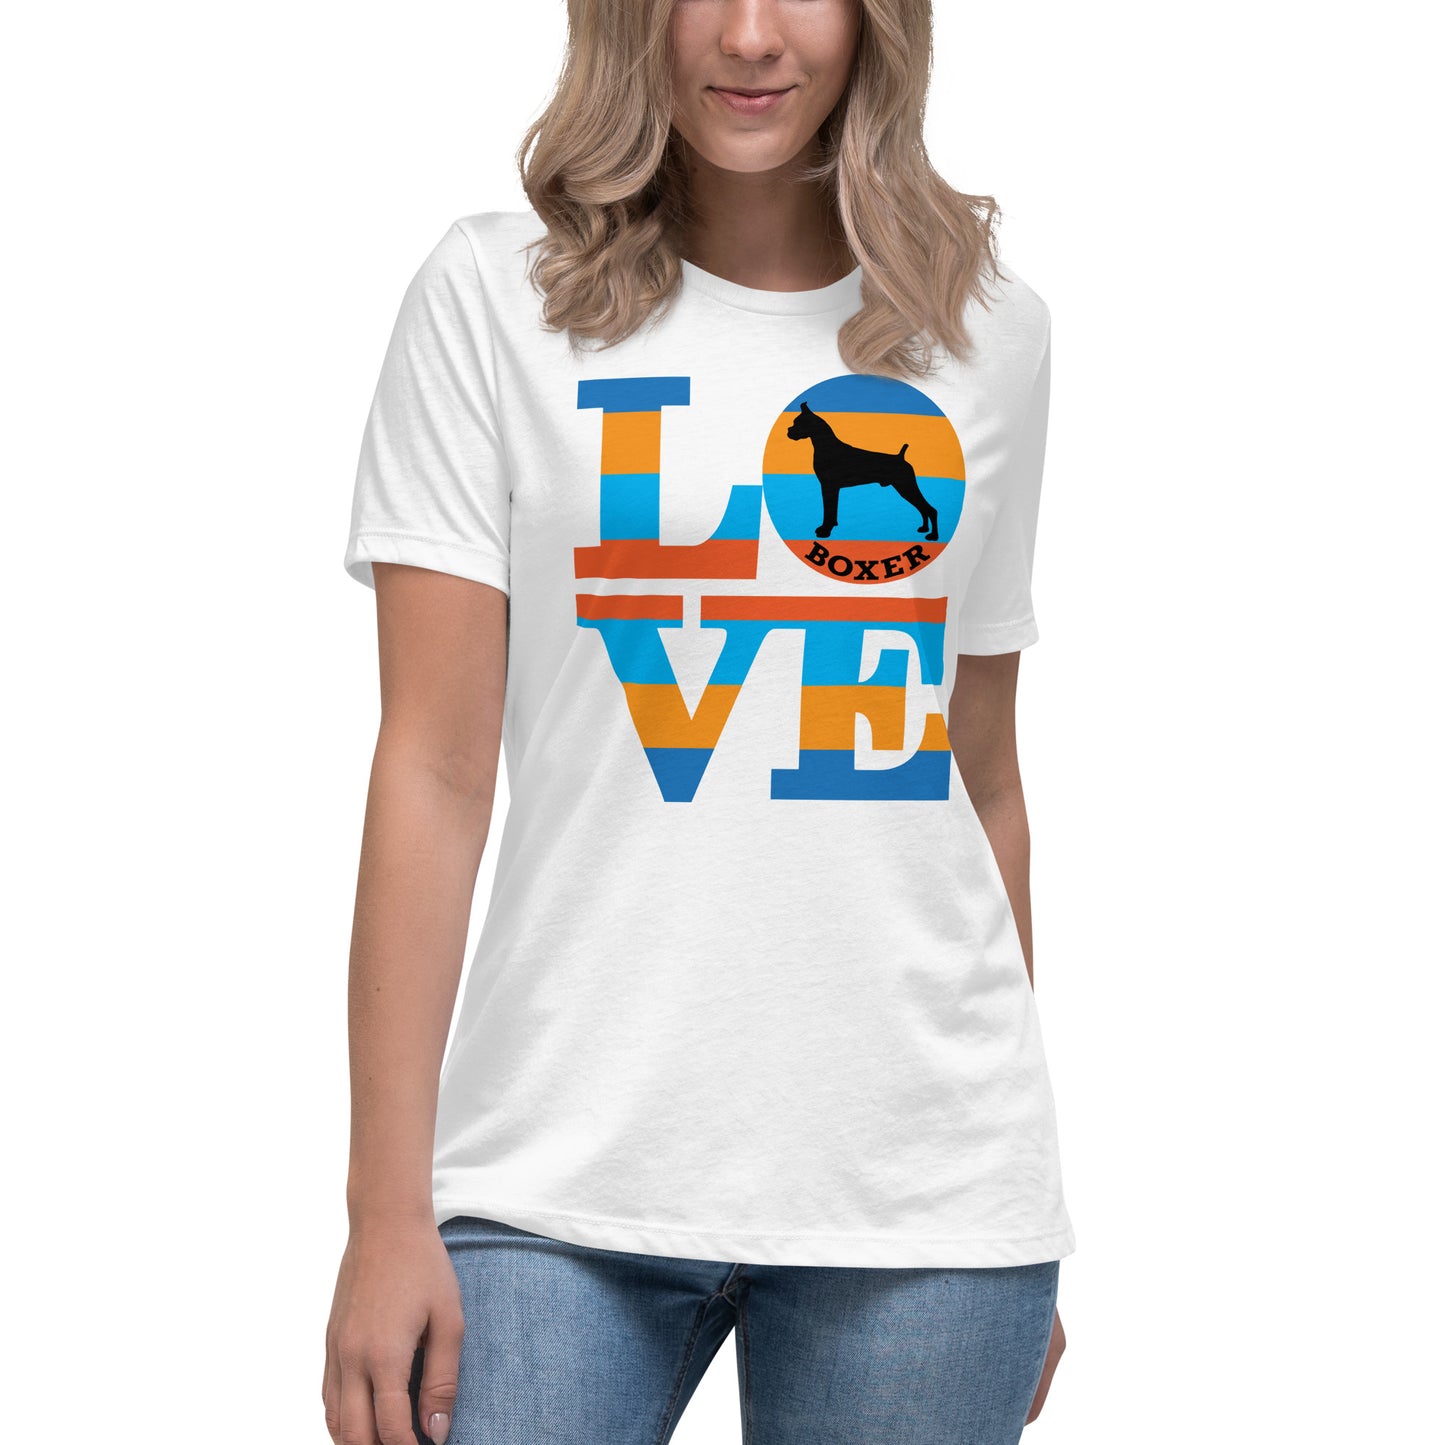 Boxer Love women’s white t-shirt by Dog Artistry.